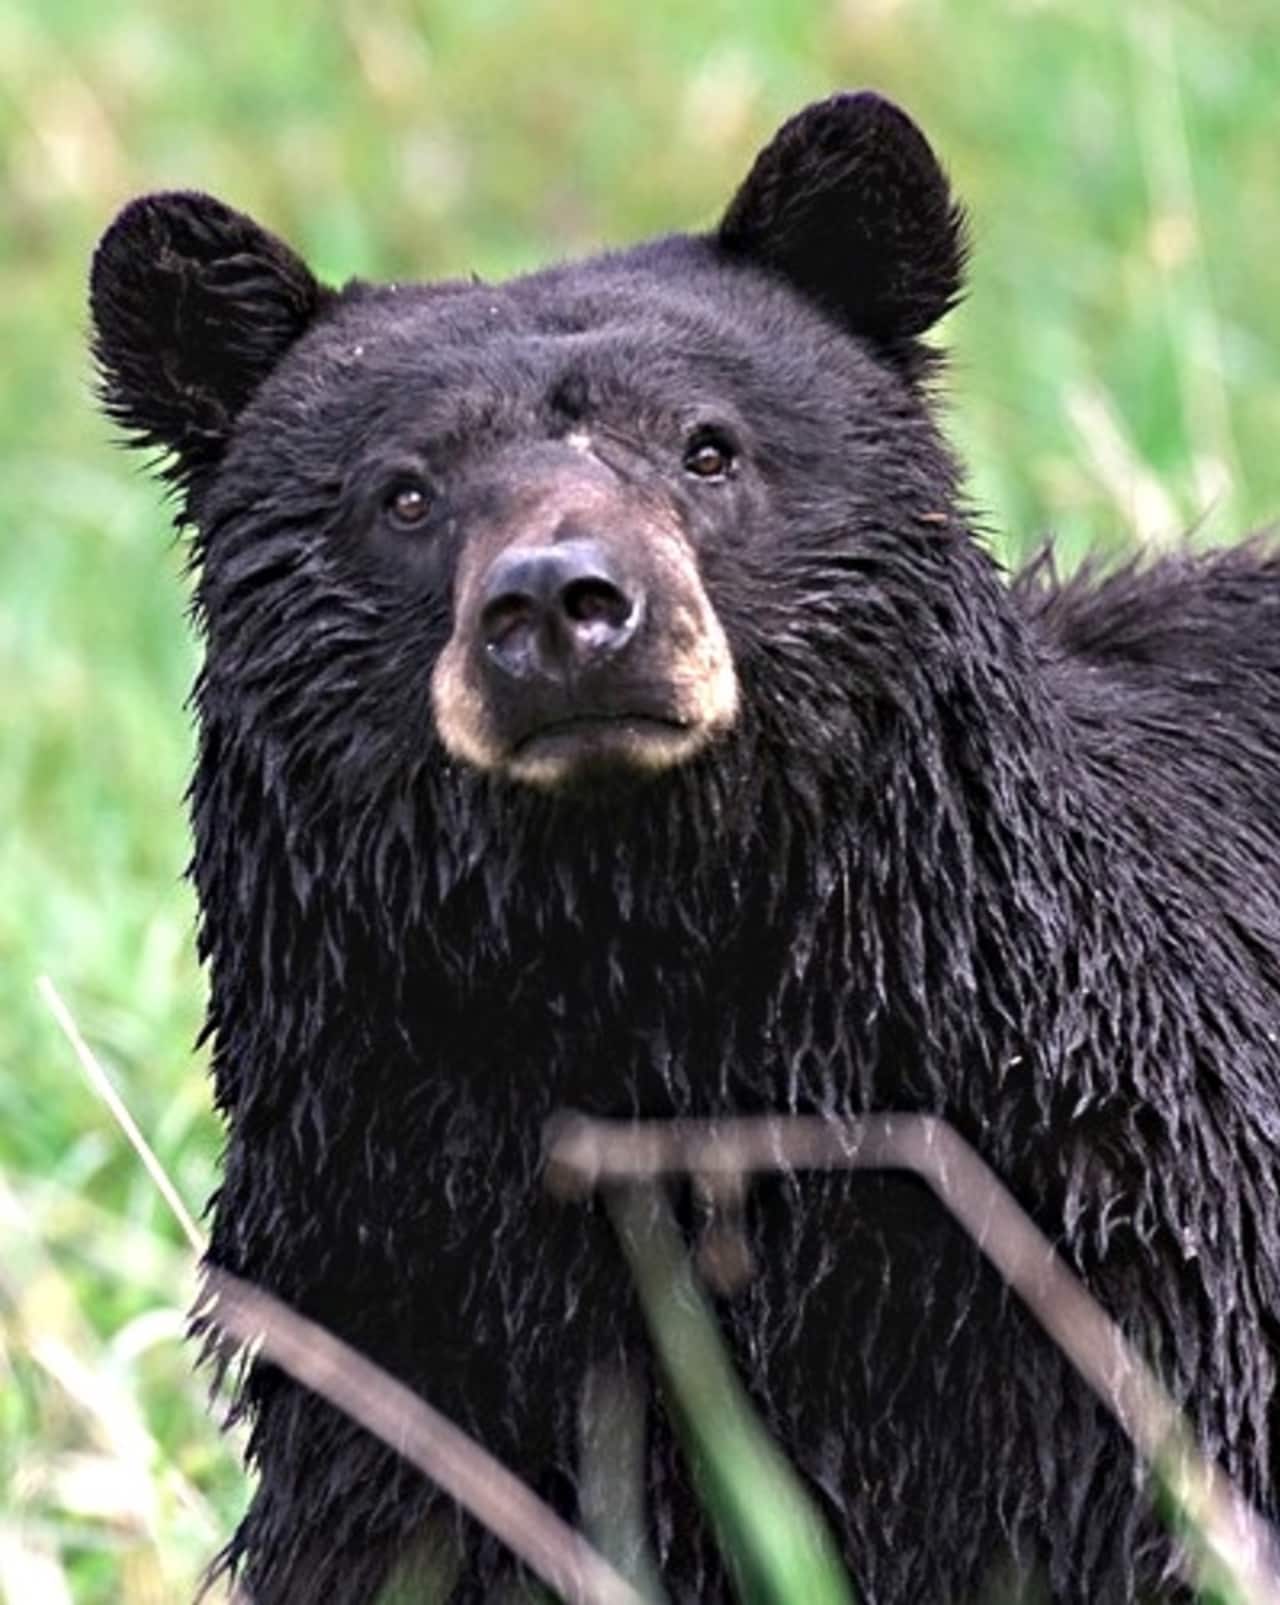 Black bear hunting season got under way in northern New Jersey Monday.